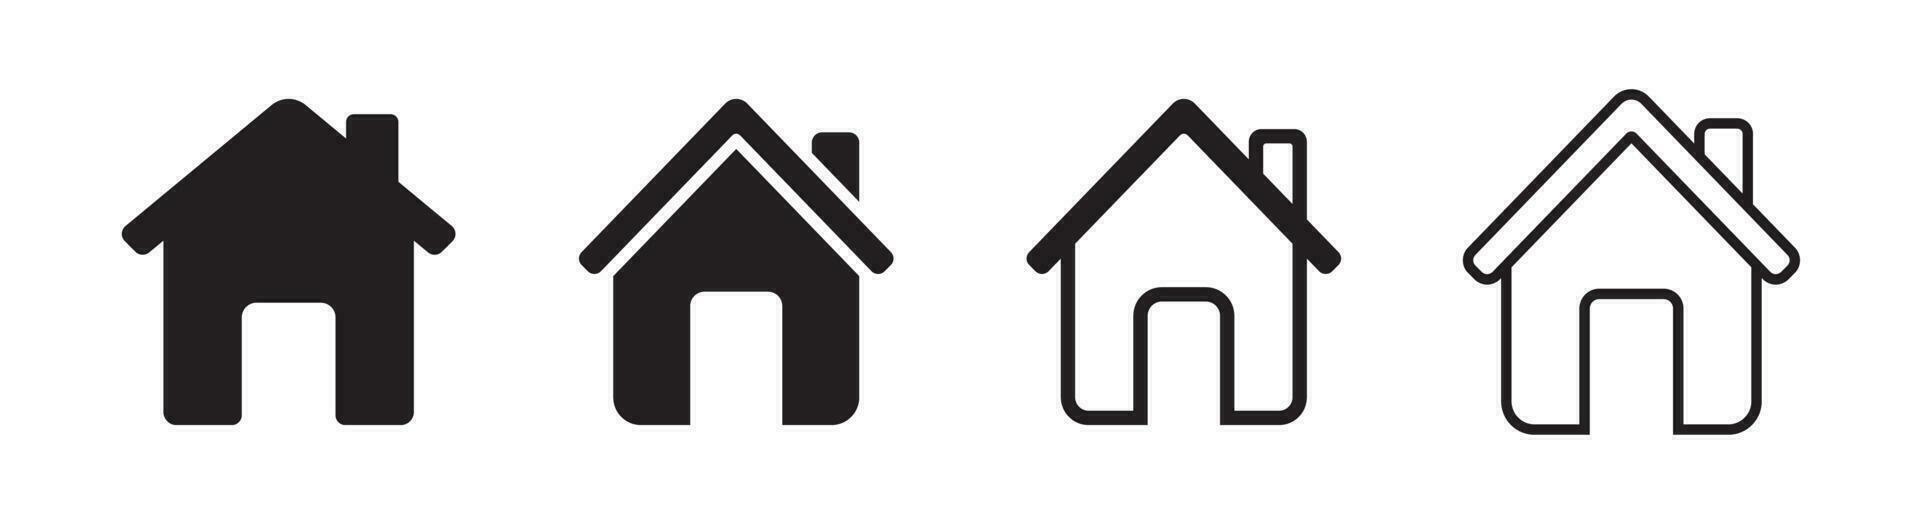 conjunto de 4 4 casa o hogar icono plano glifo estilo y resumido editable ataque, clipart diseño modelo vector